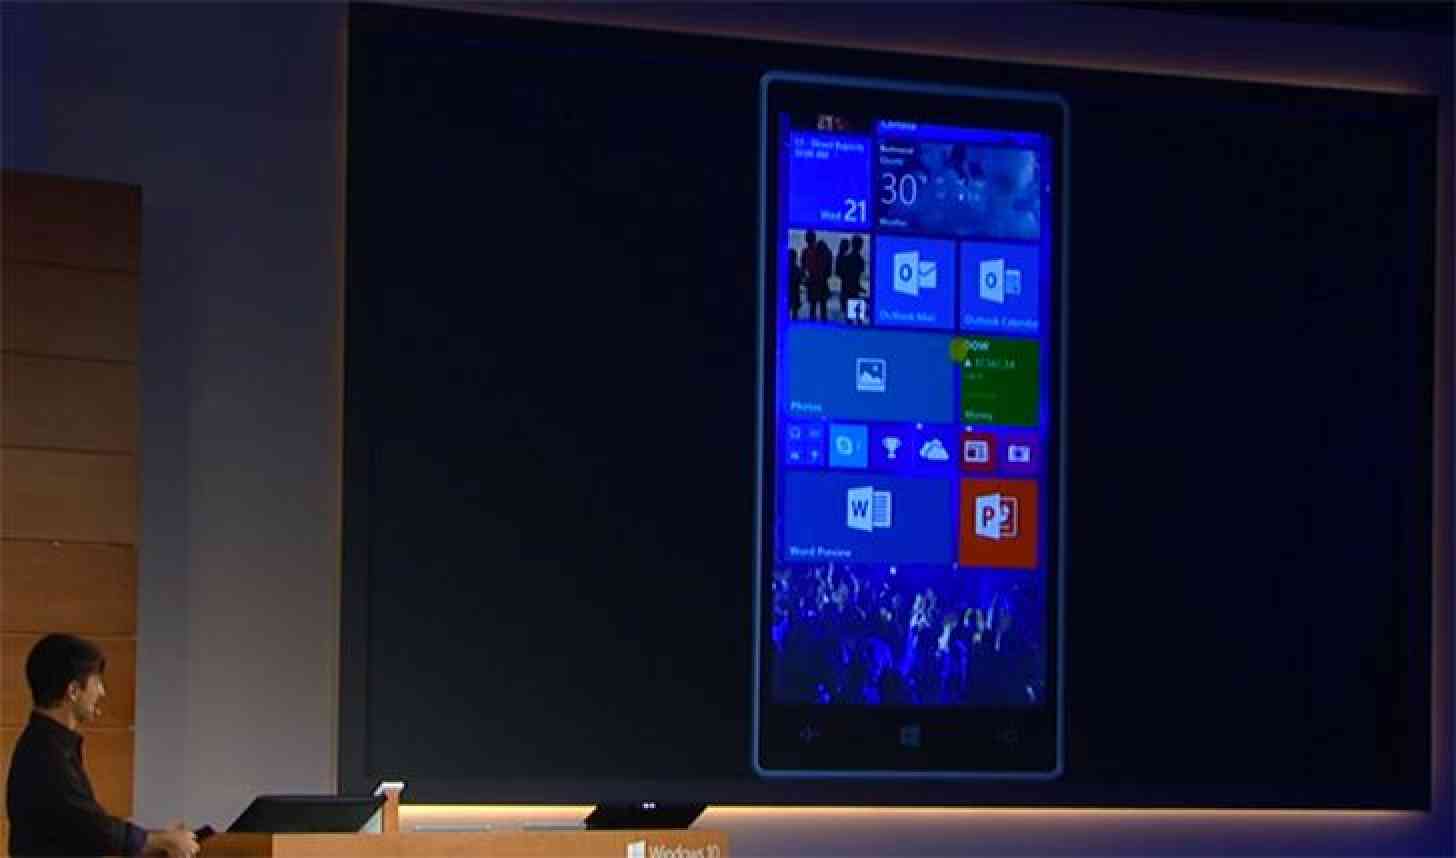 Windows 10 phone Start screen